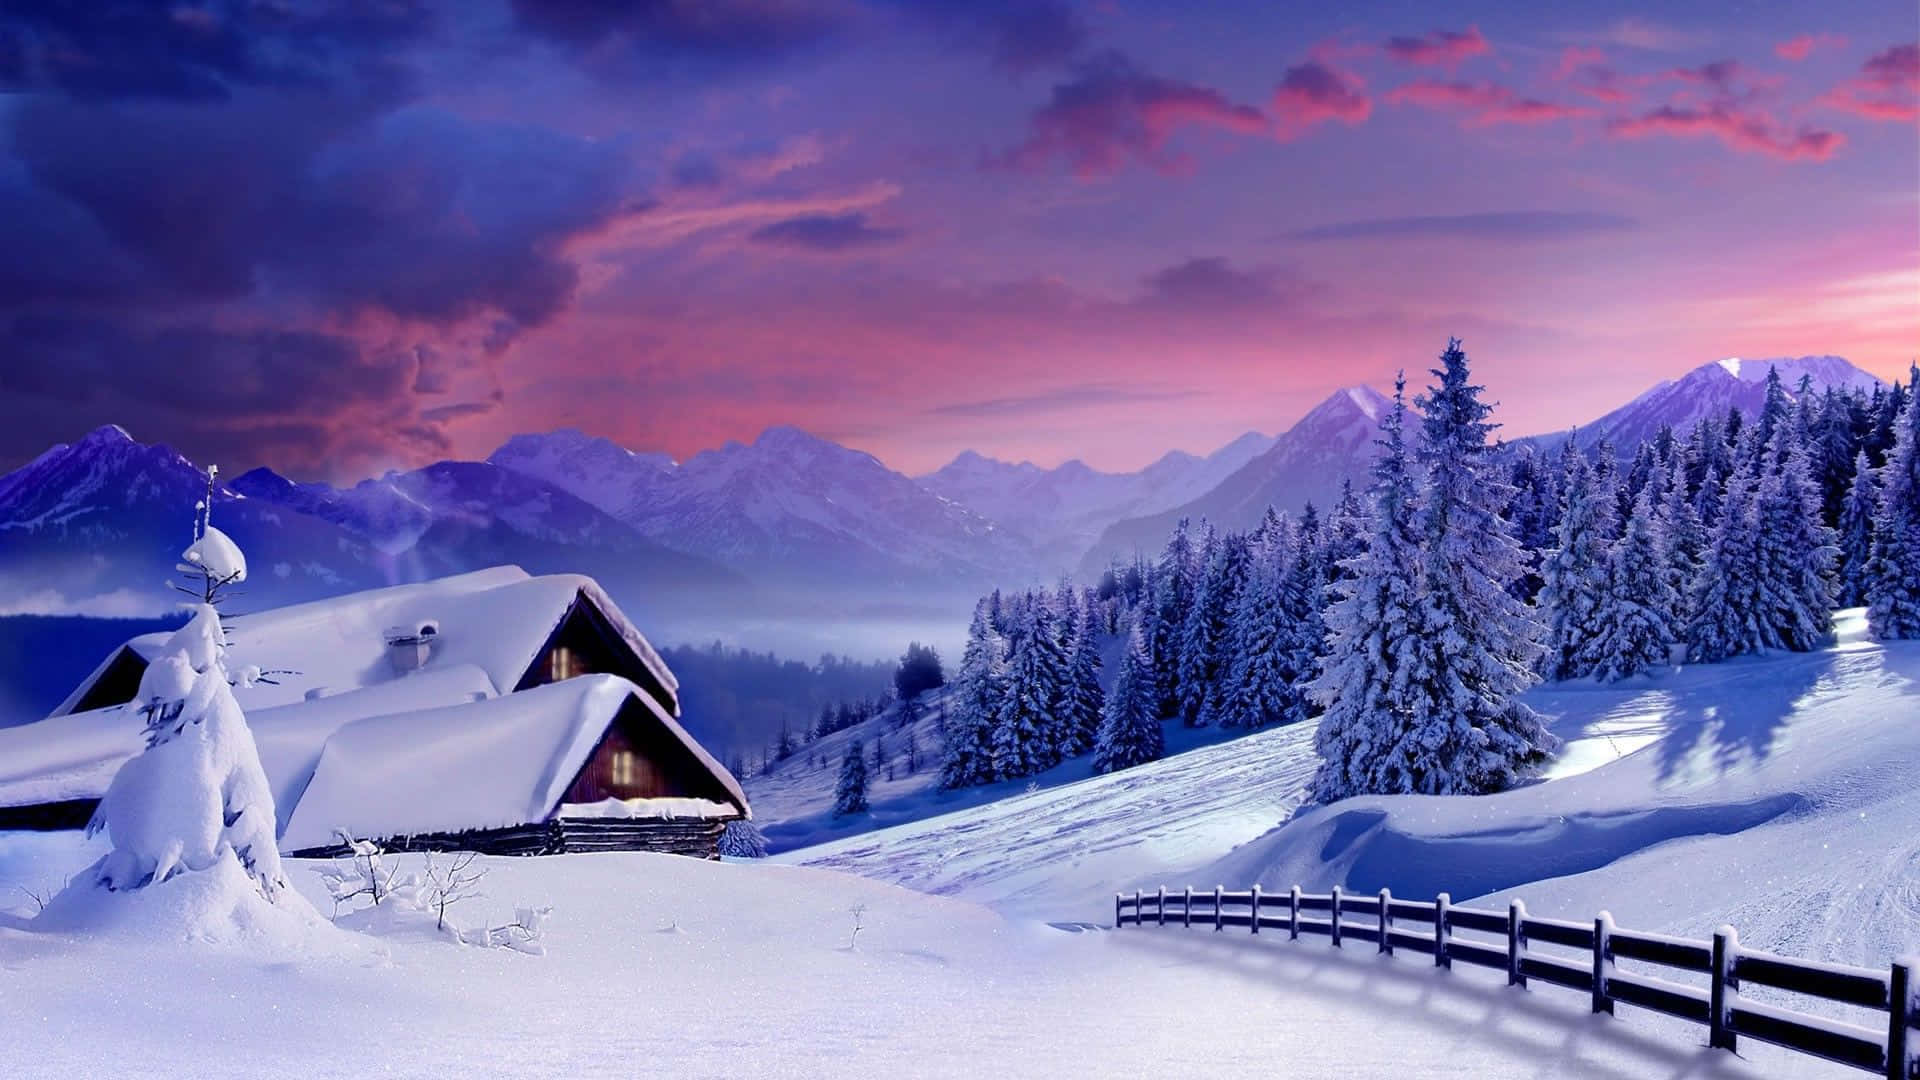 Stunning Snowy Landscape Wallpaper